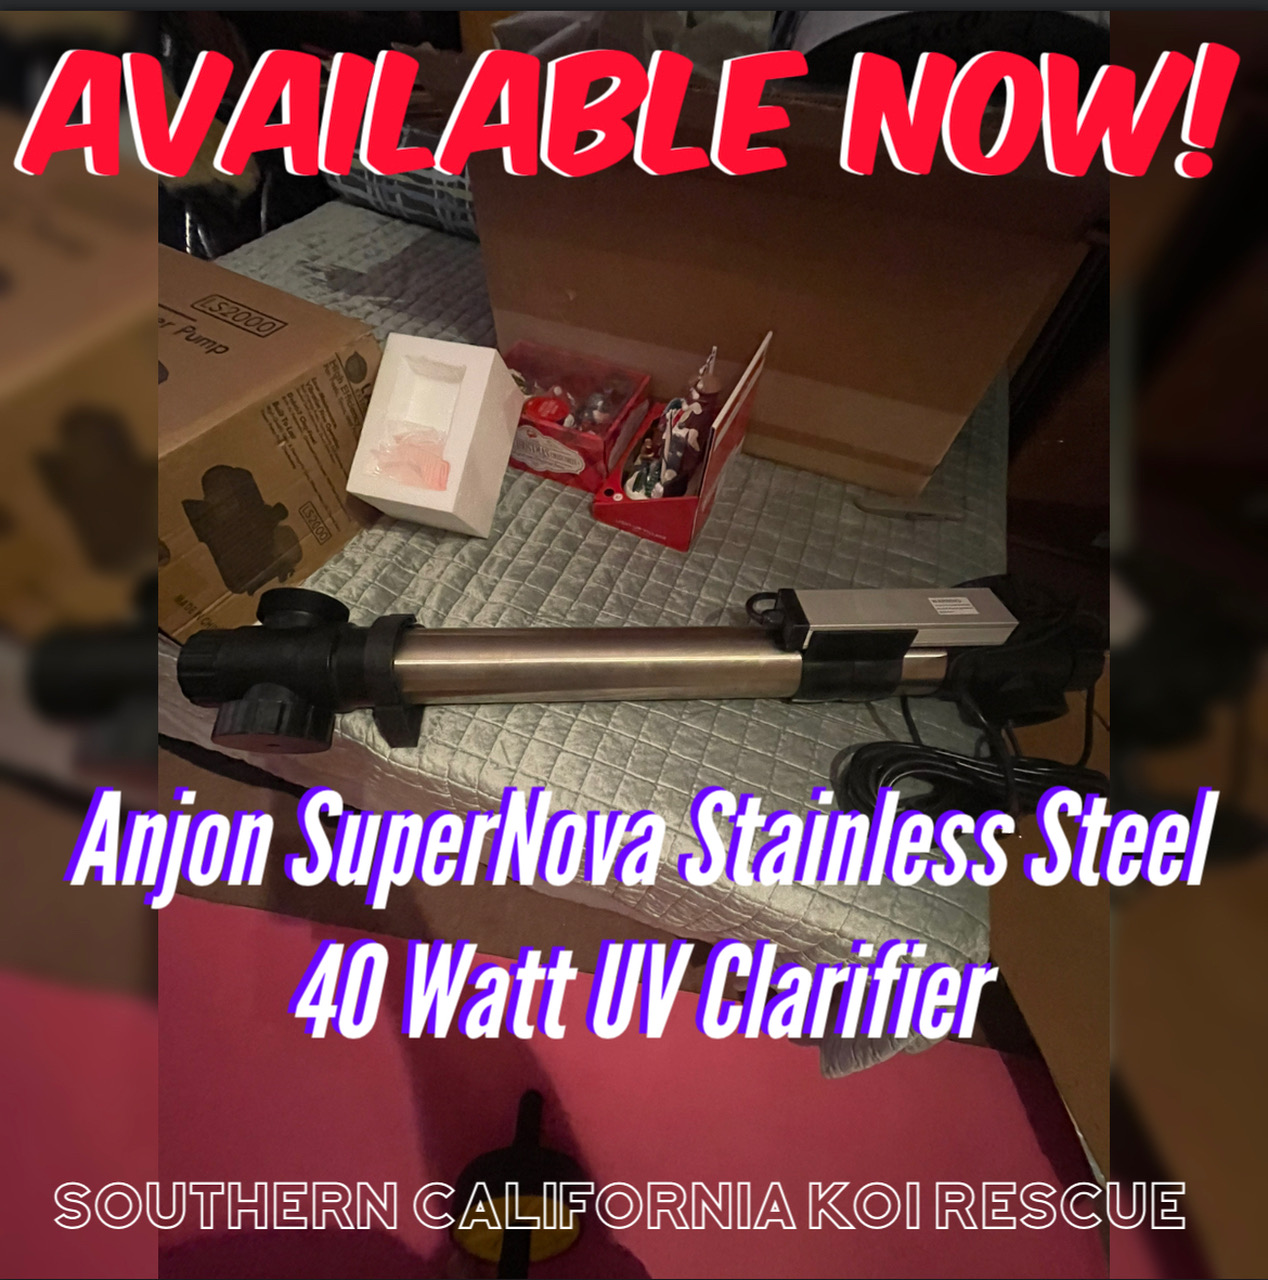 Anjon Manufacturing Stainless Steel SuperNova 40 Watt UV Clarifier (New)